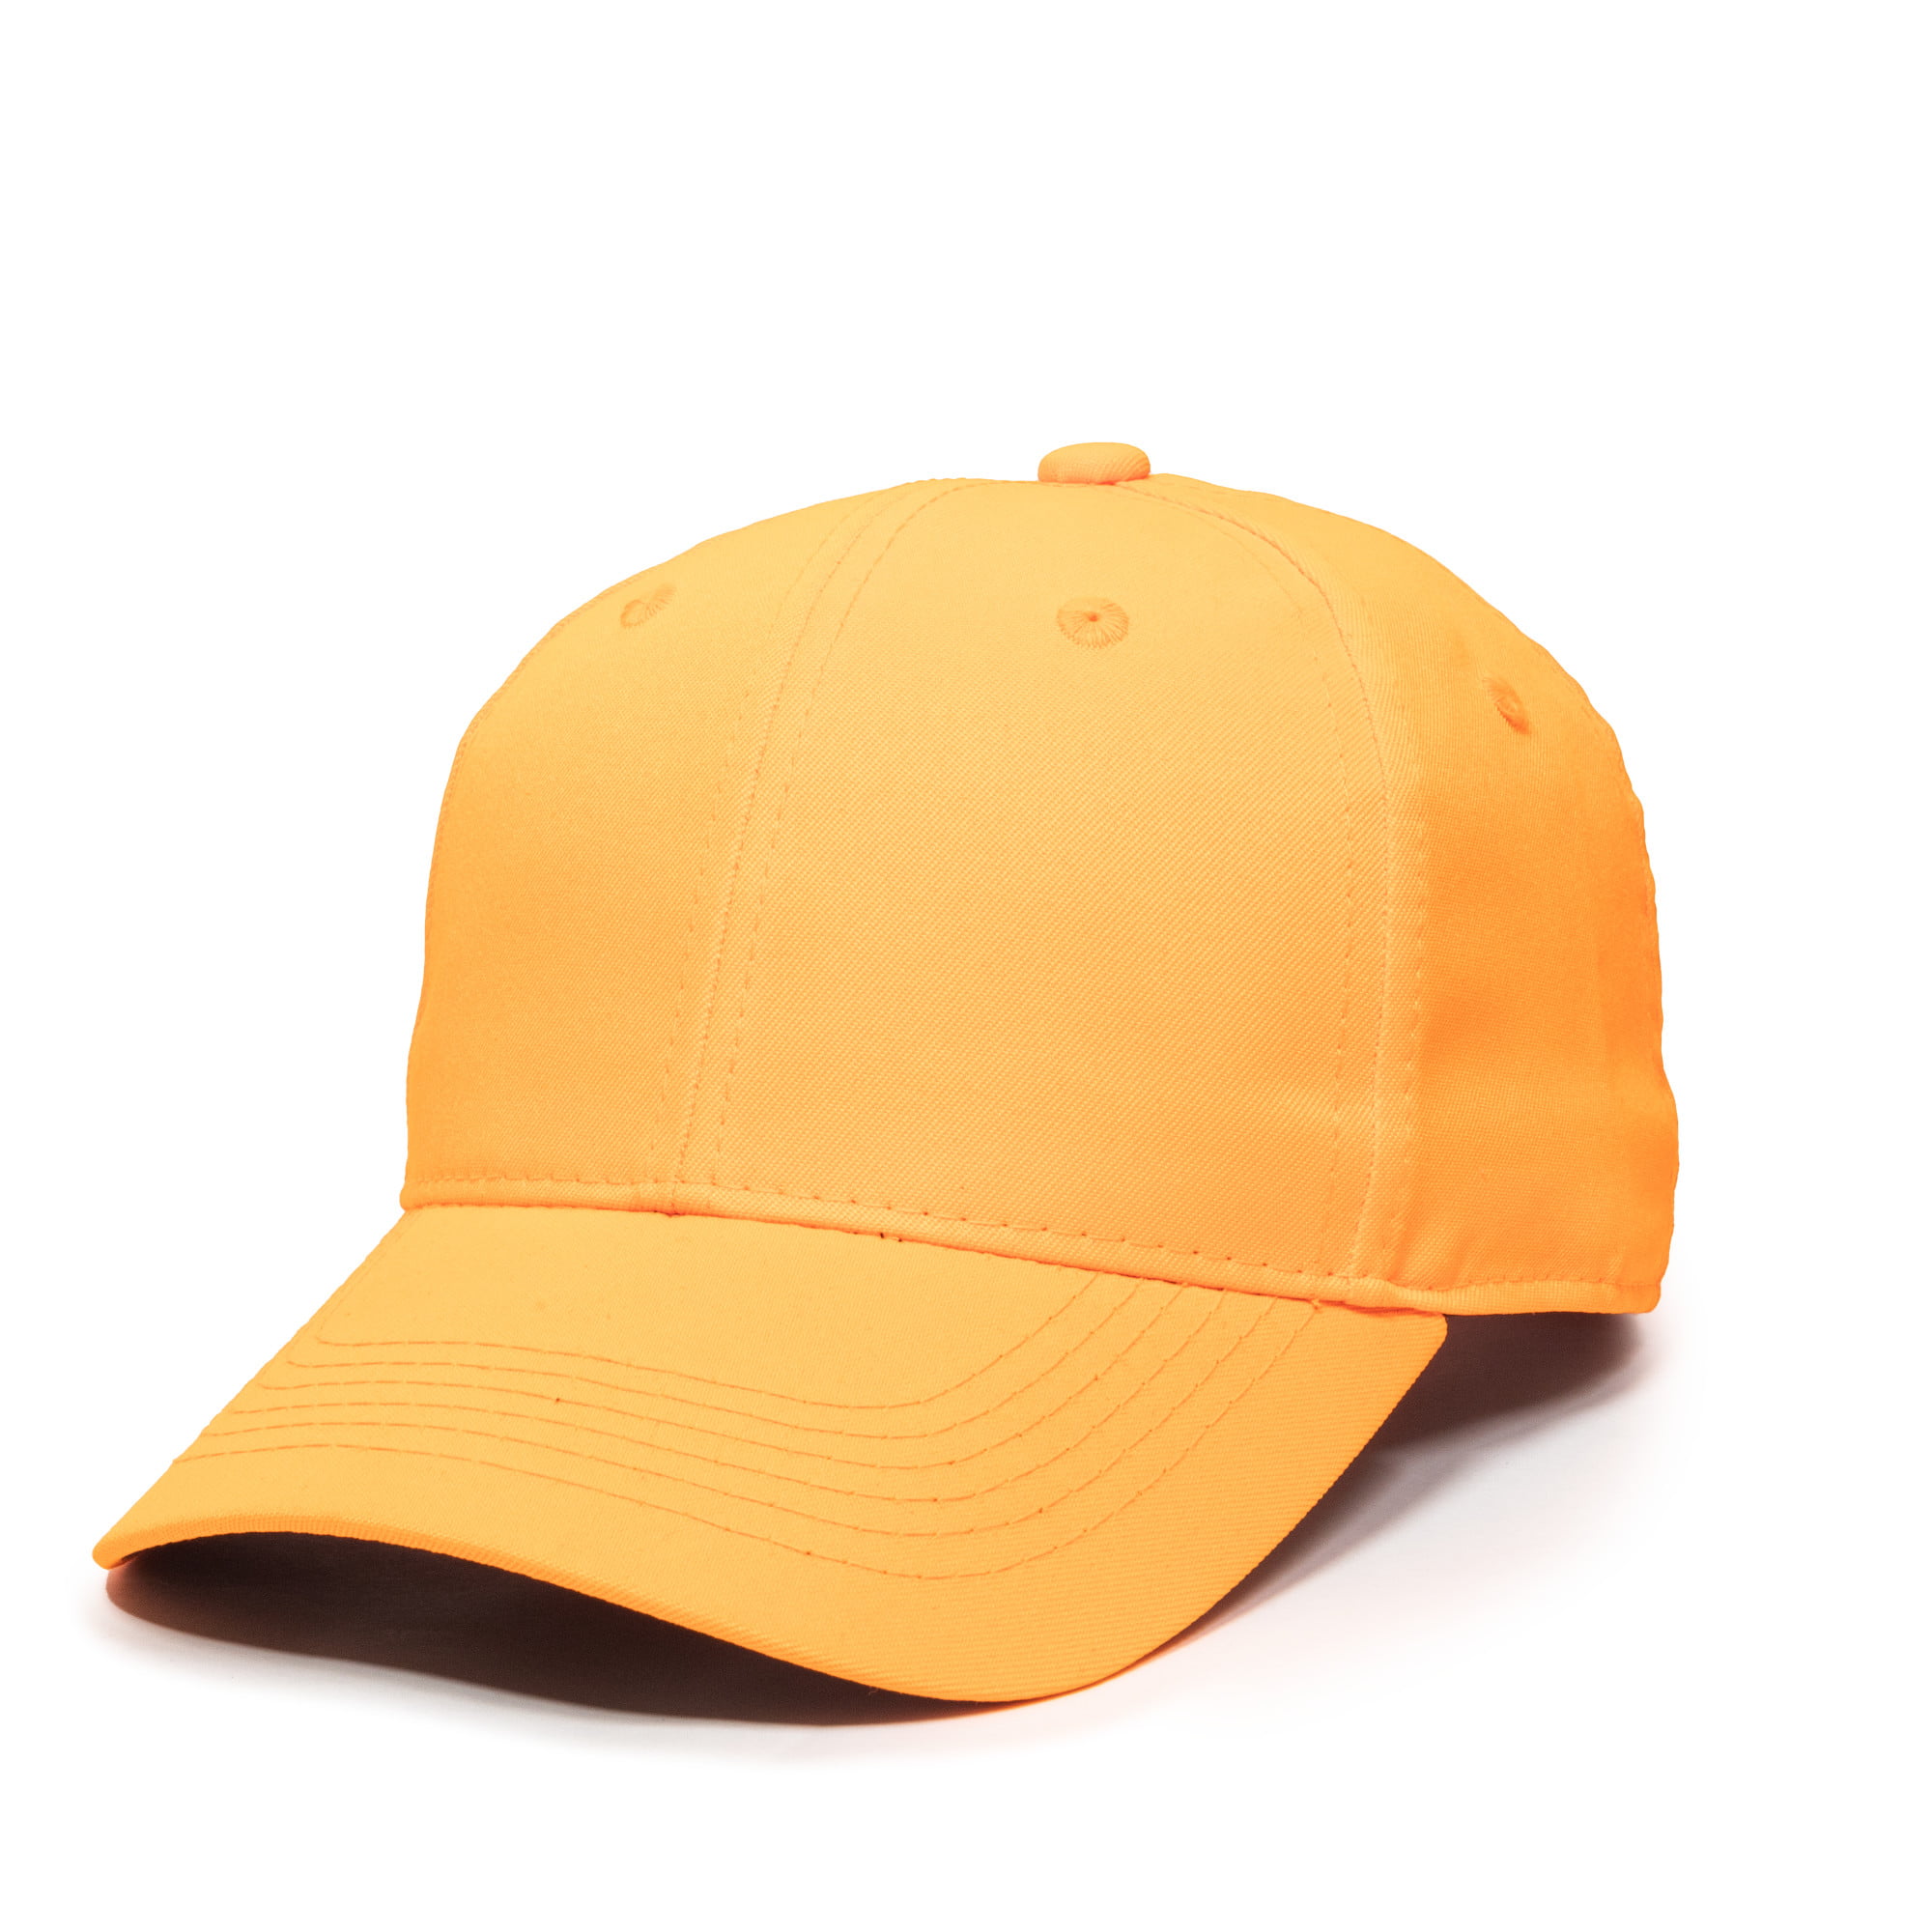 DressInn Boys Accessories Headwear Caps Chevi Cap Orange 11-13 Years Boy 